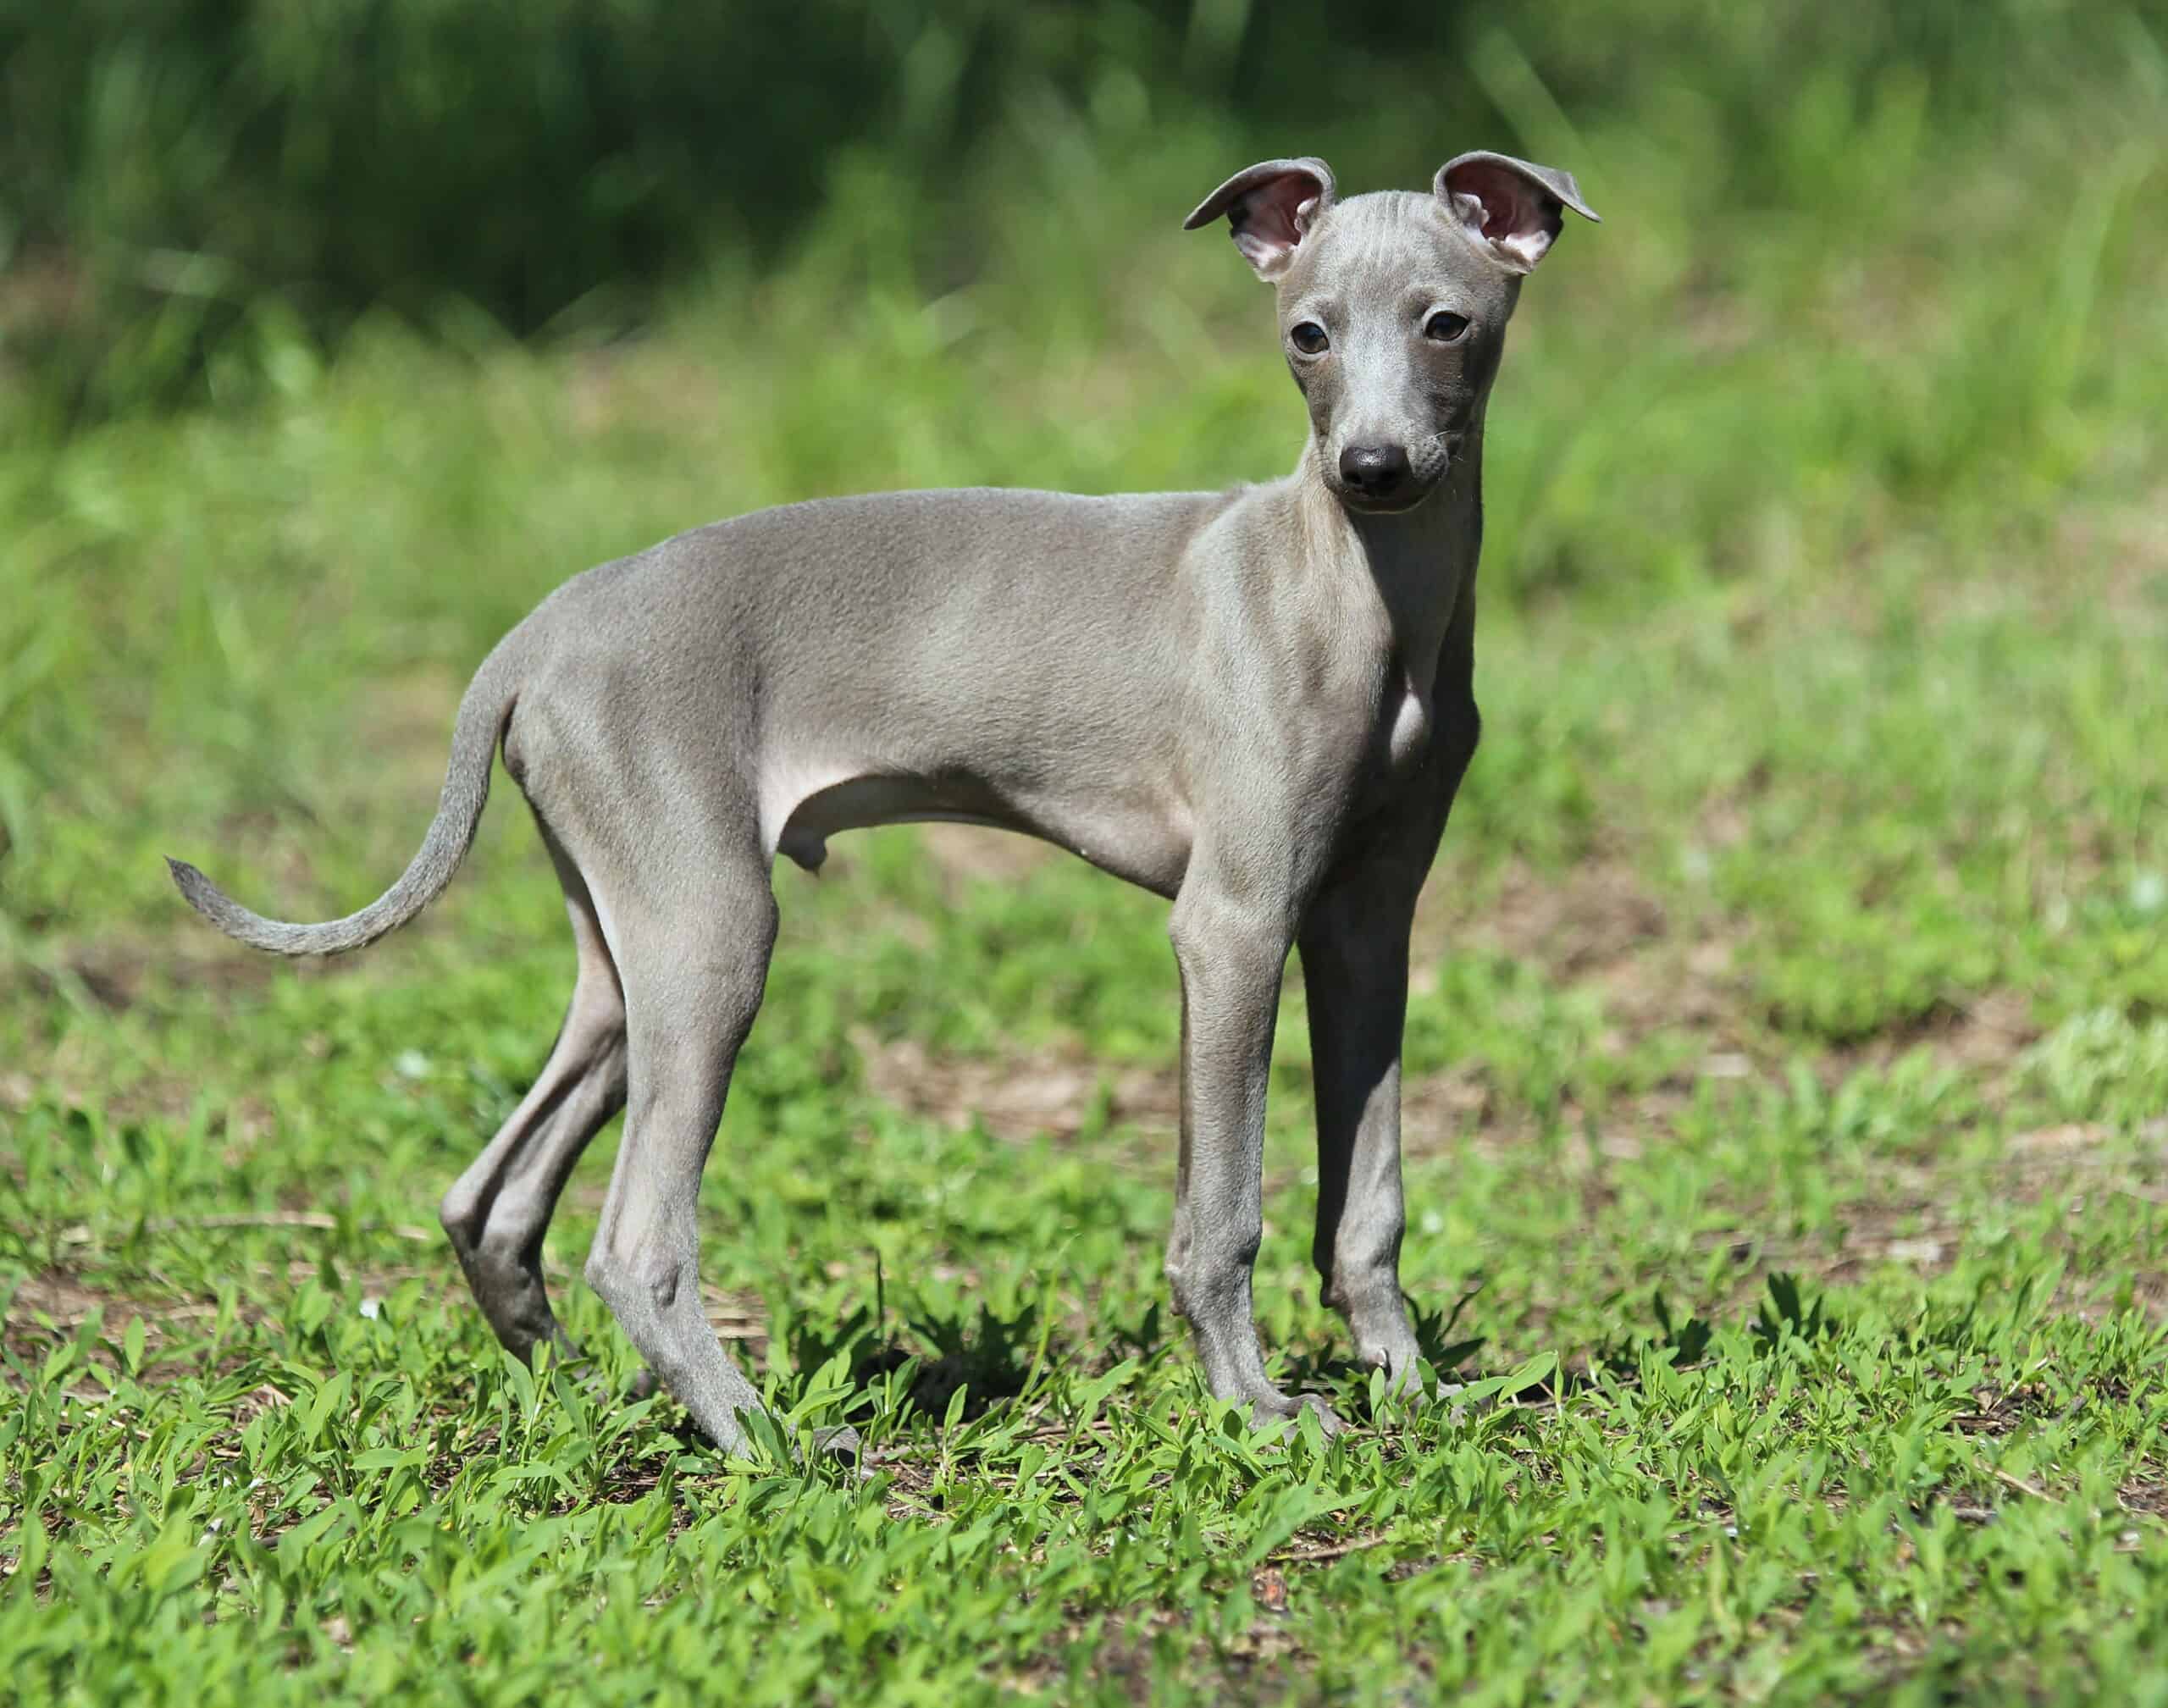 Italian Greyhound in the yard